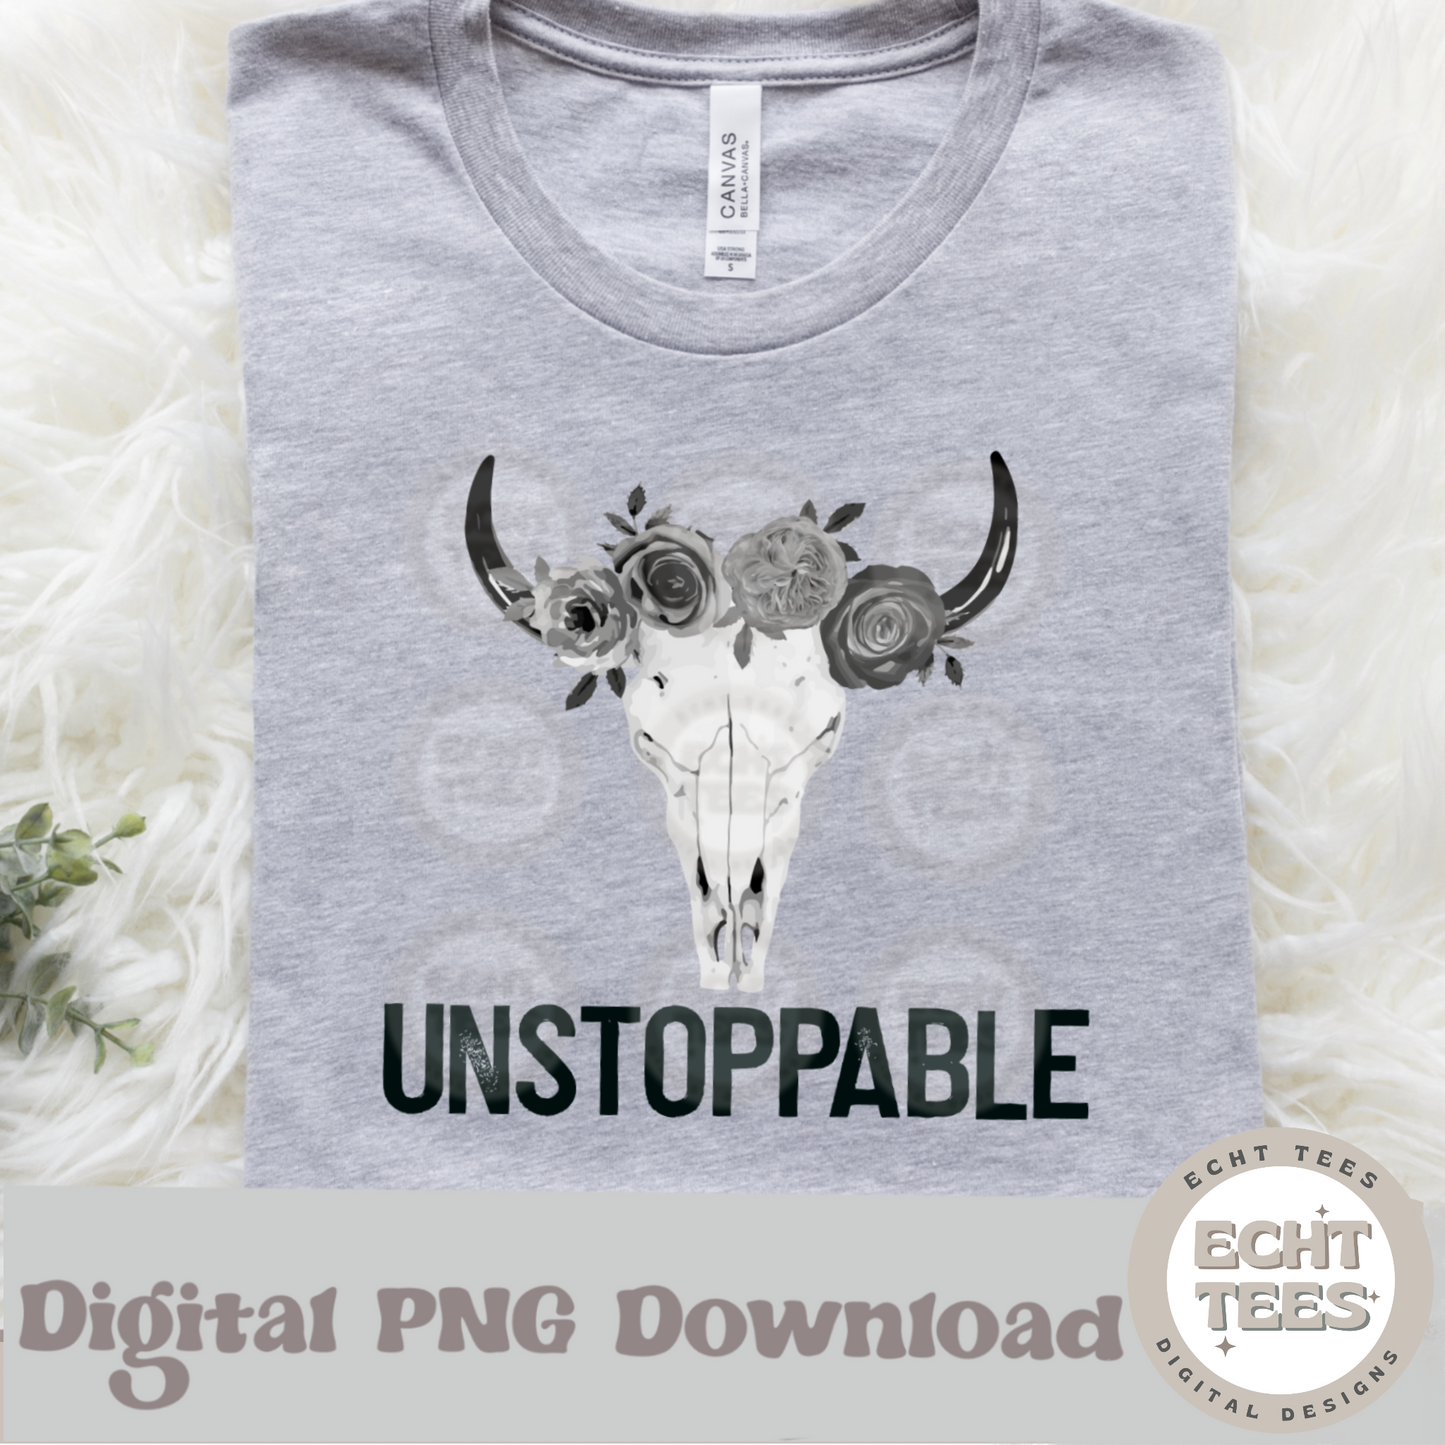 Unstoppable PNG Digital Download